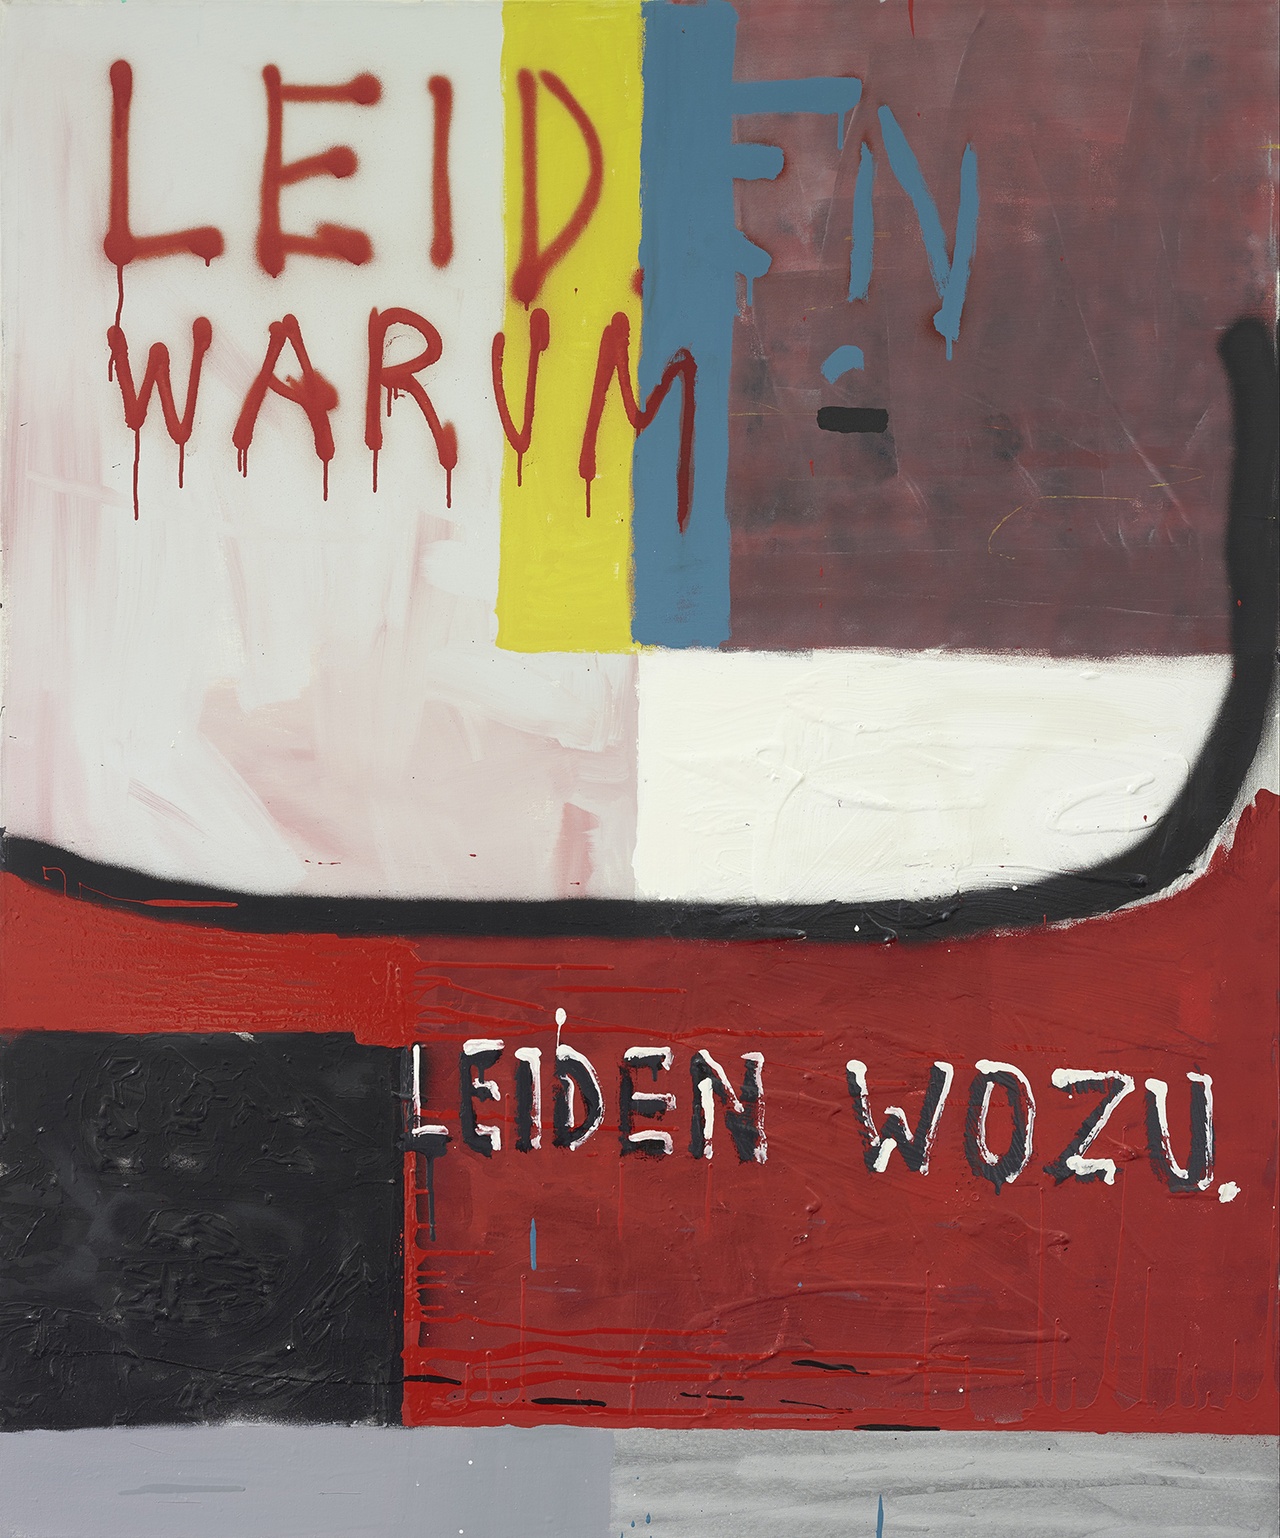 Martin Kippenberger, “Leiden warum – Leiden wozu,” 1982